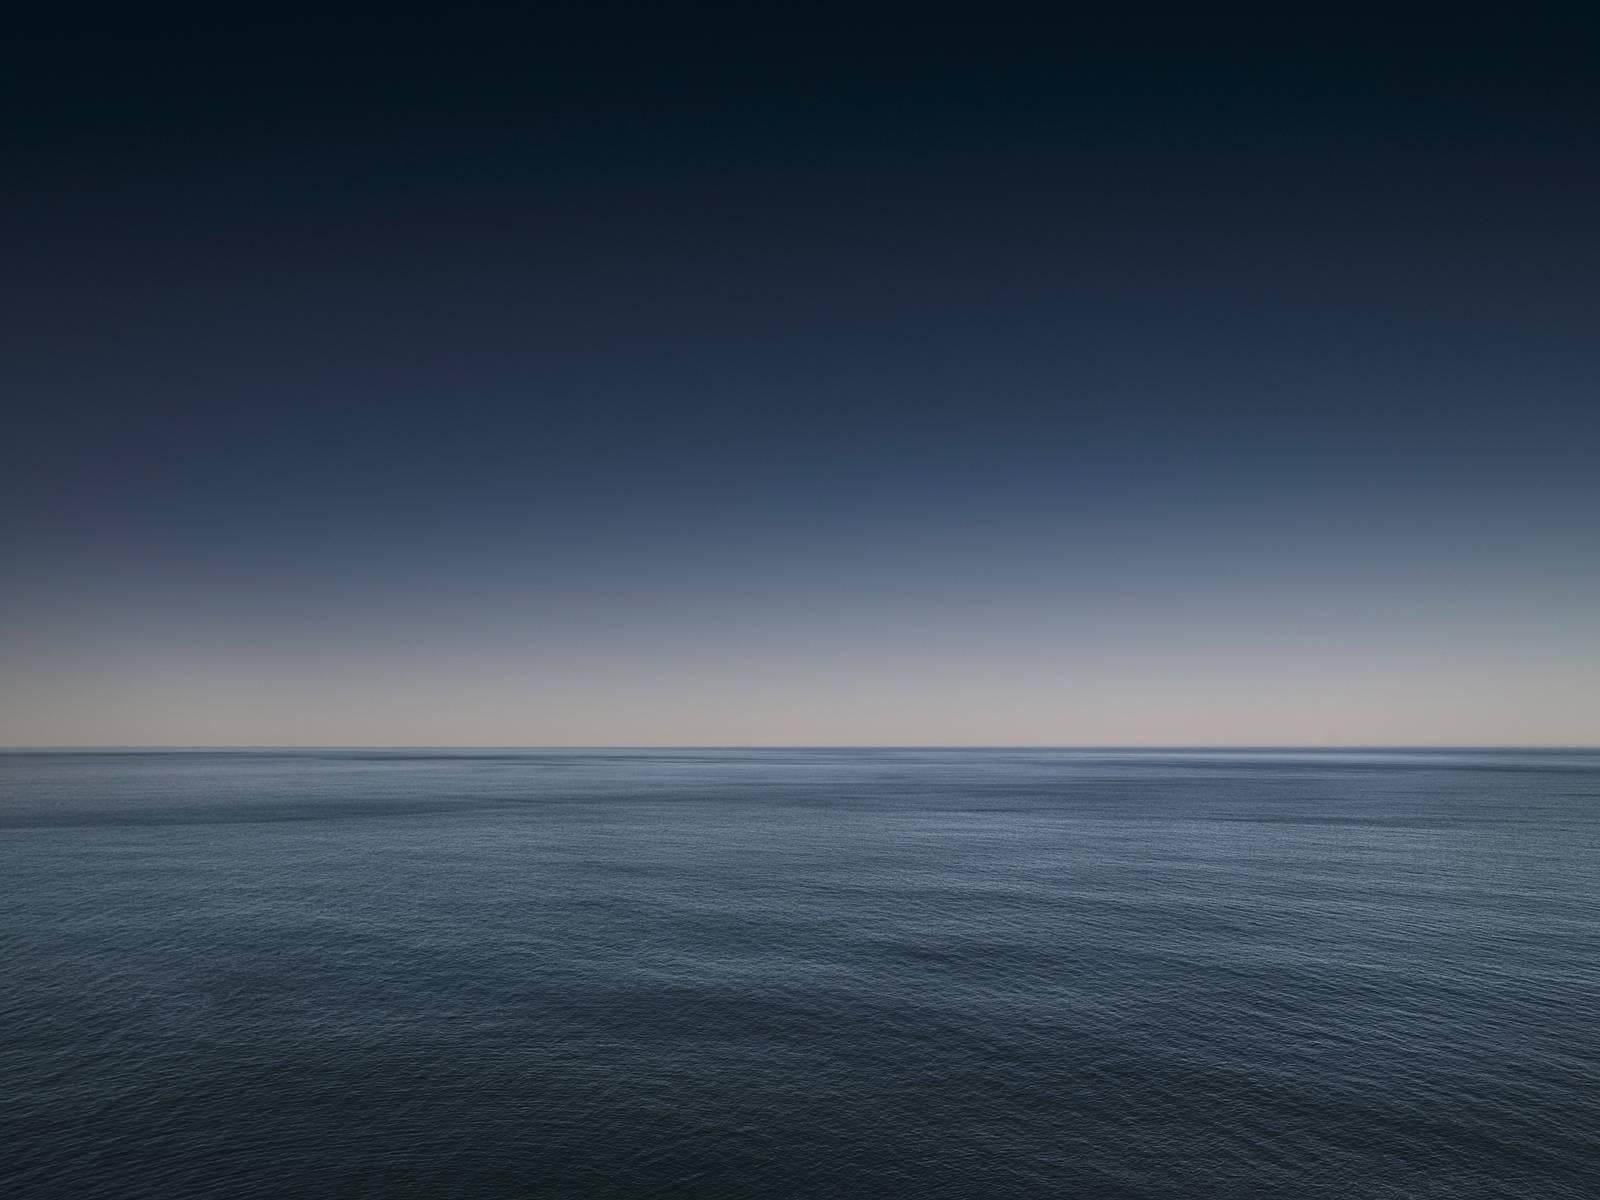 Frank Schott Landscape Print - Seascape I (framed) - large format photograph of blue tone horizon and sea